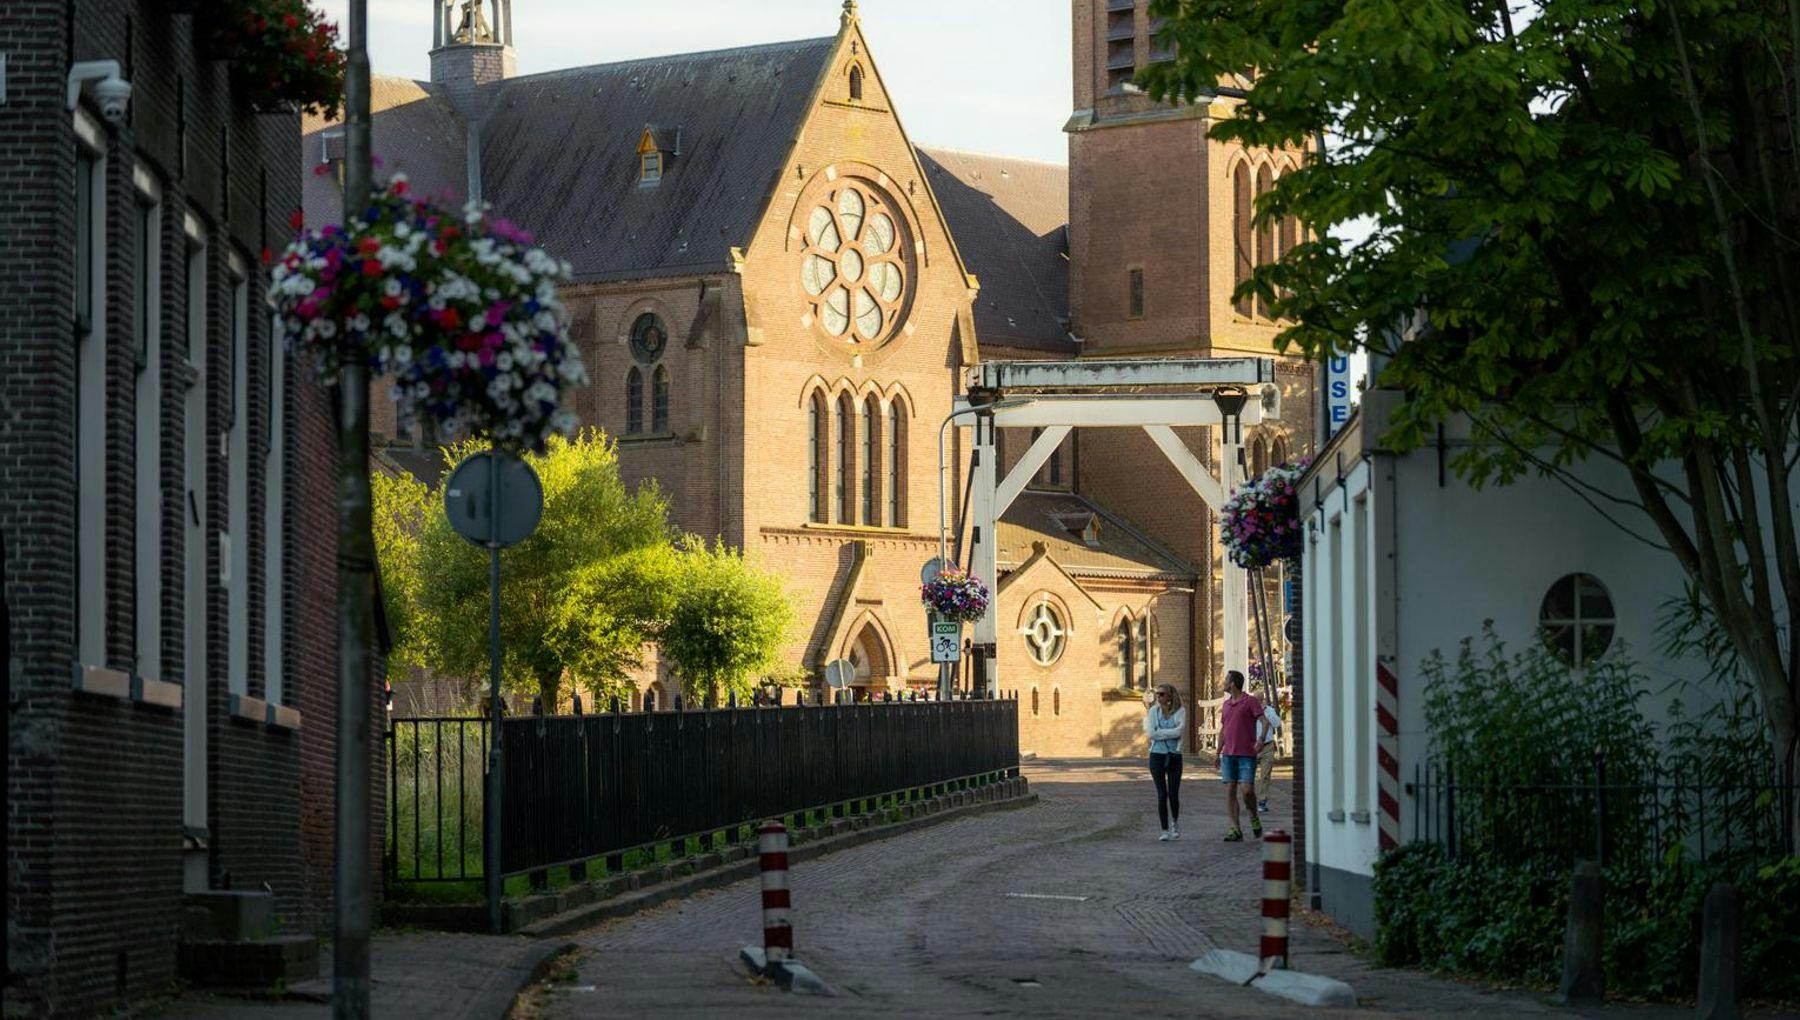 The Sint-Urbanuskerk in the village of Oudekerk aan de Amstel.